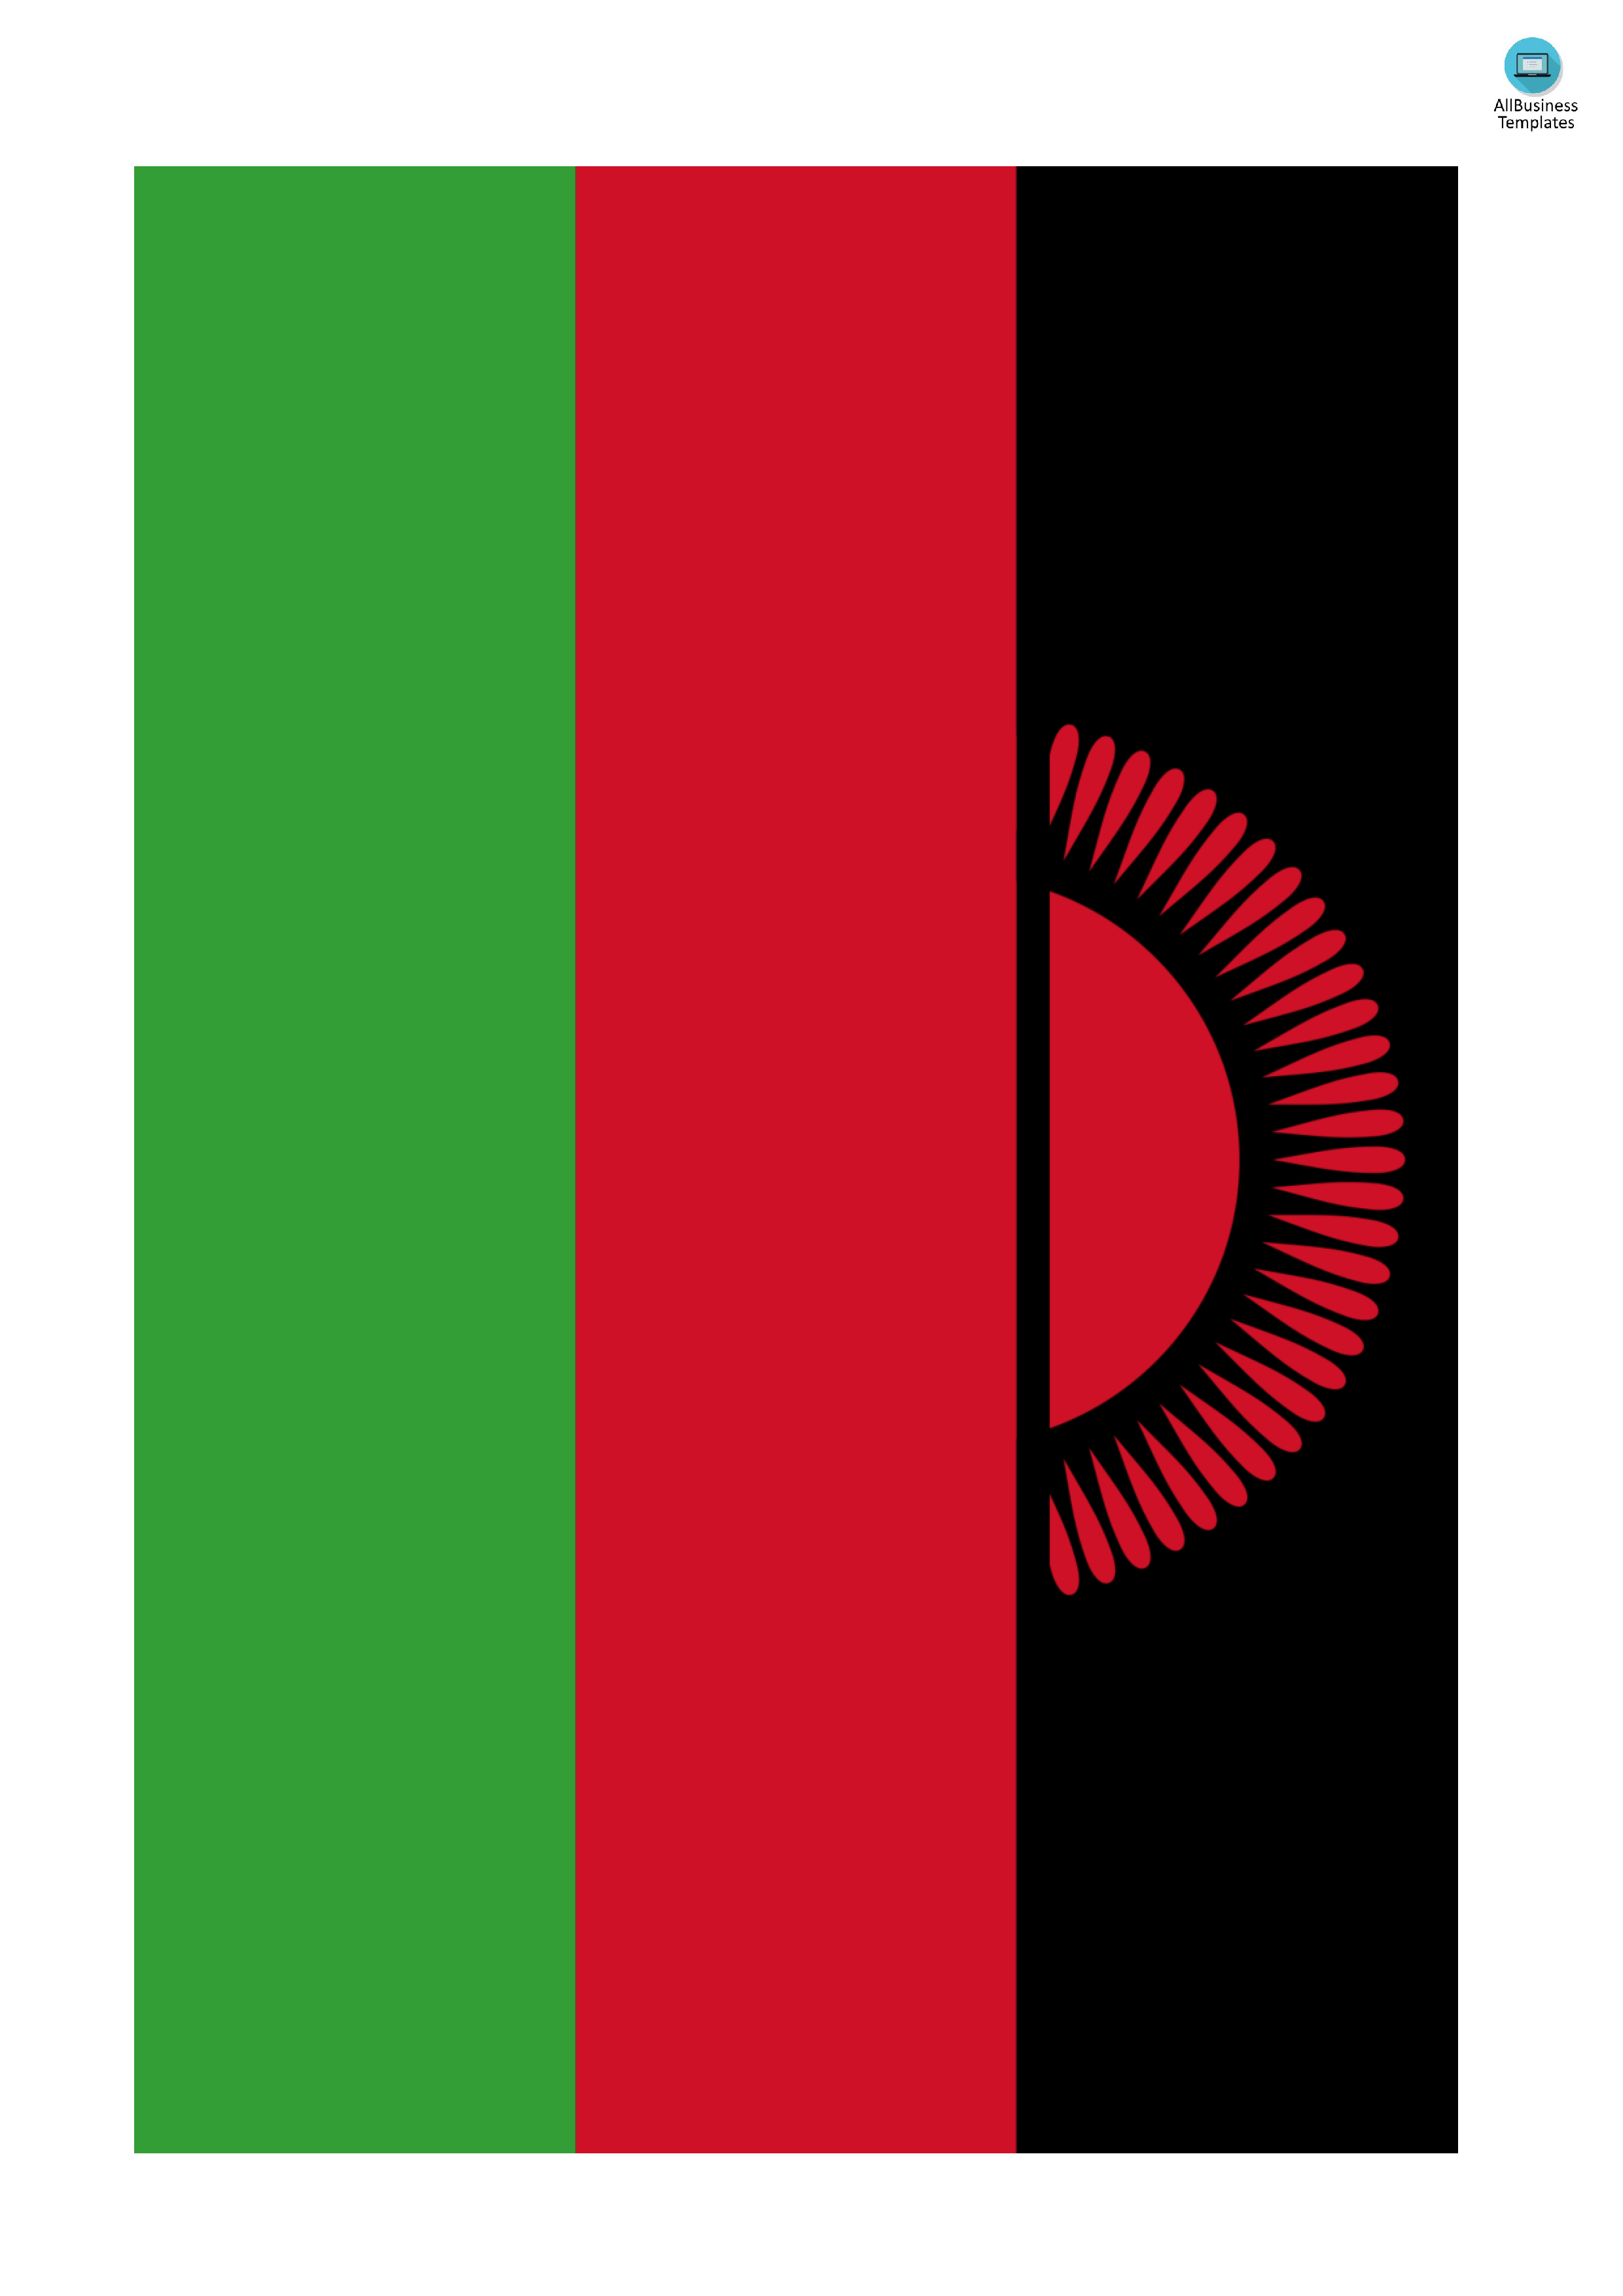 malawi flag plantilla imagen principal